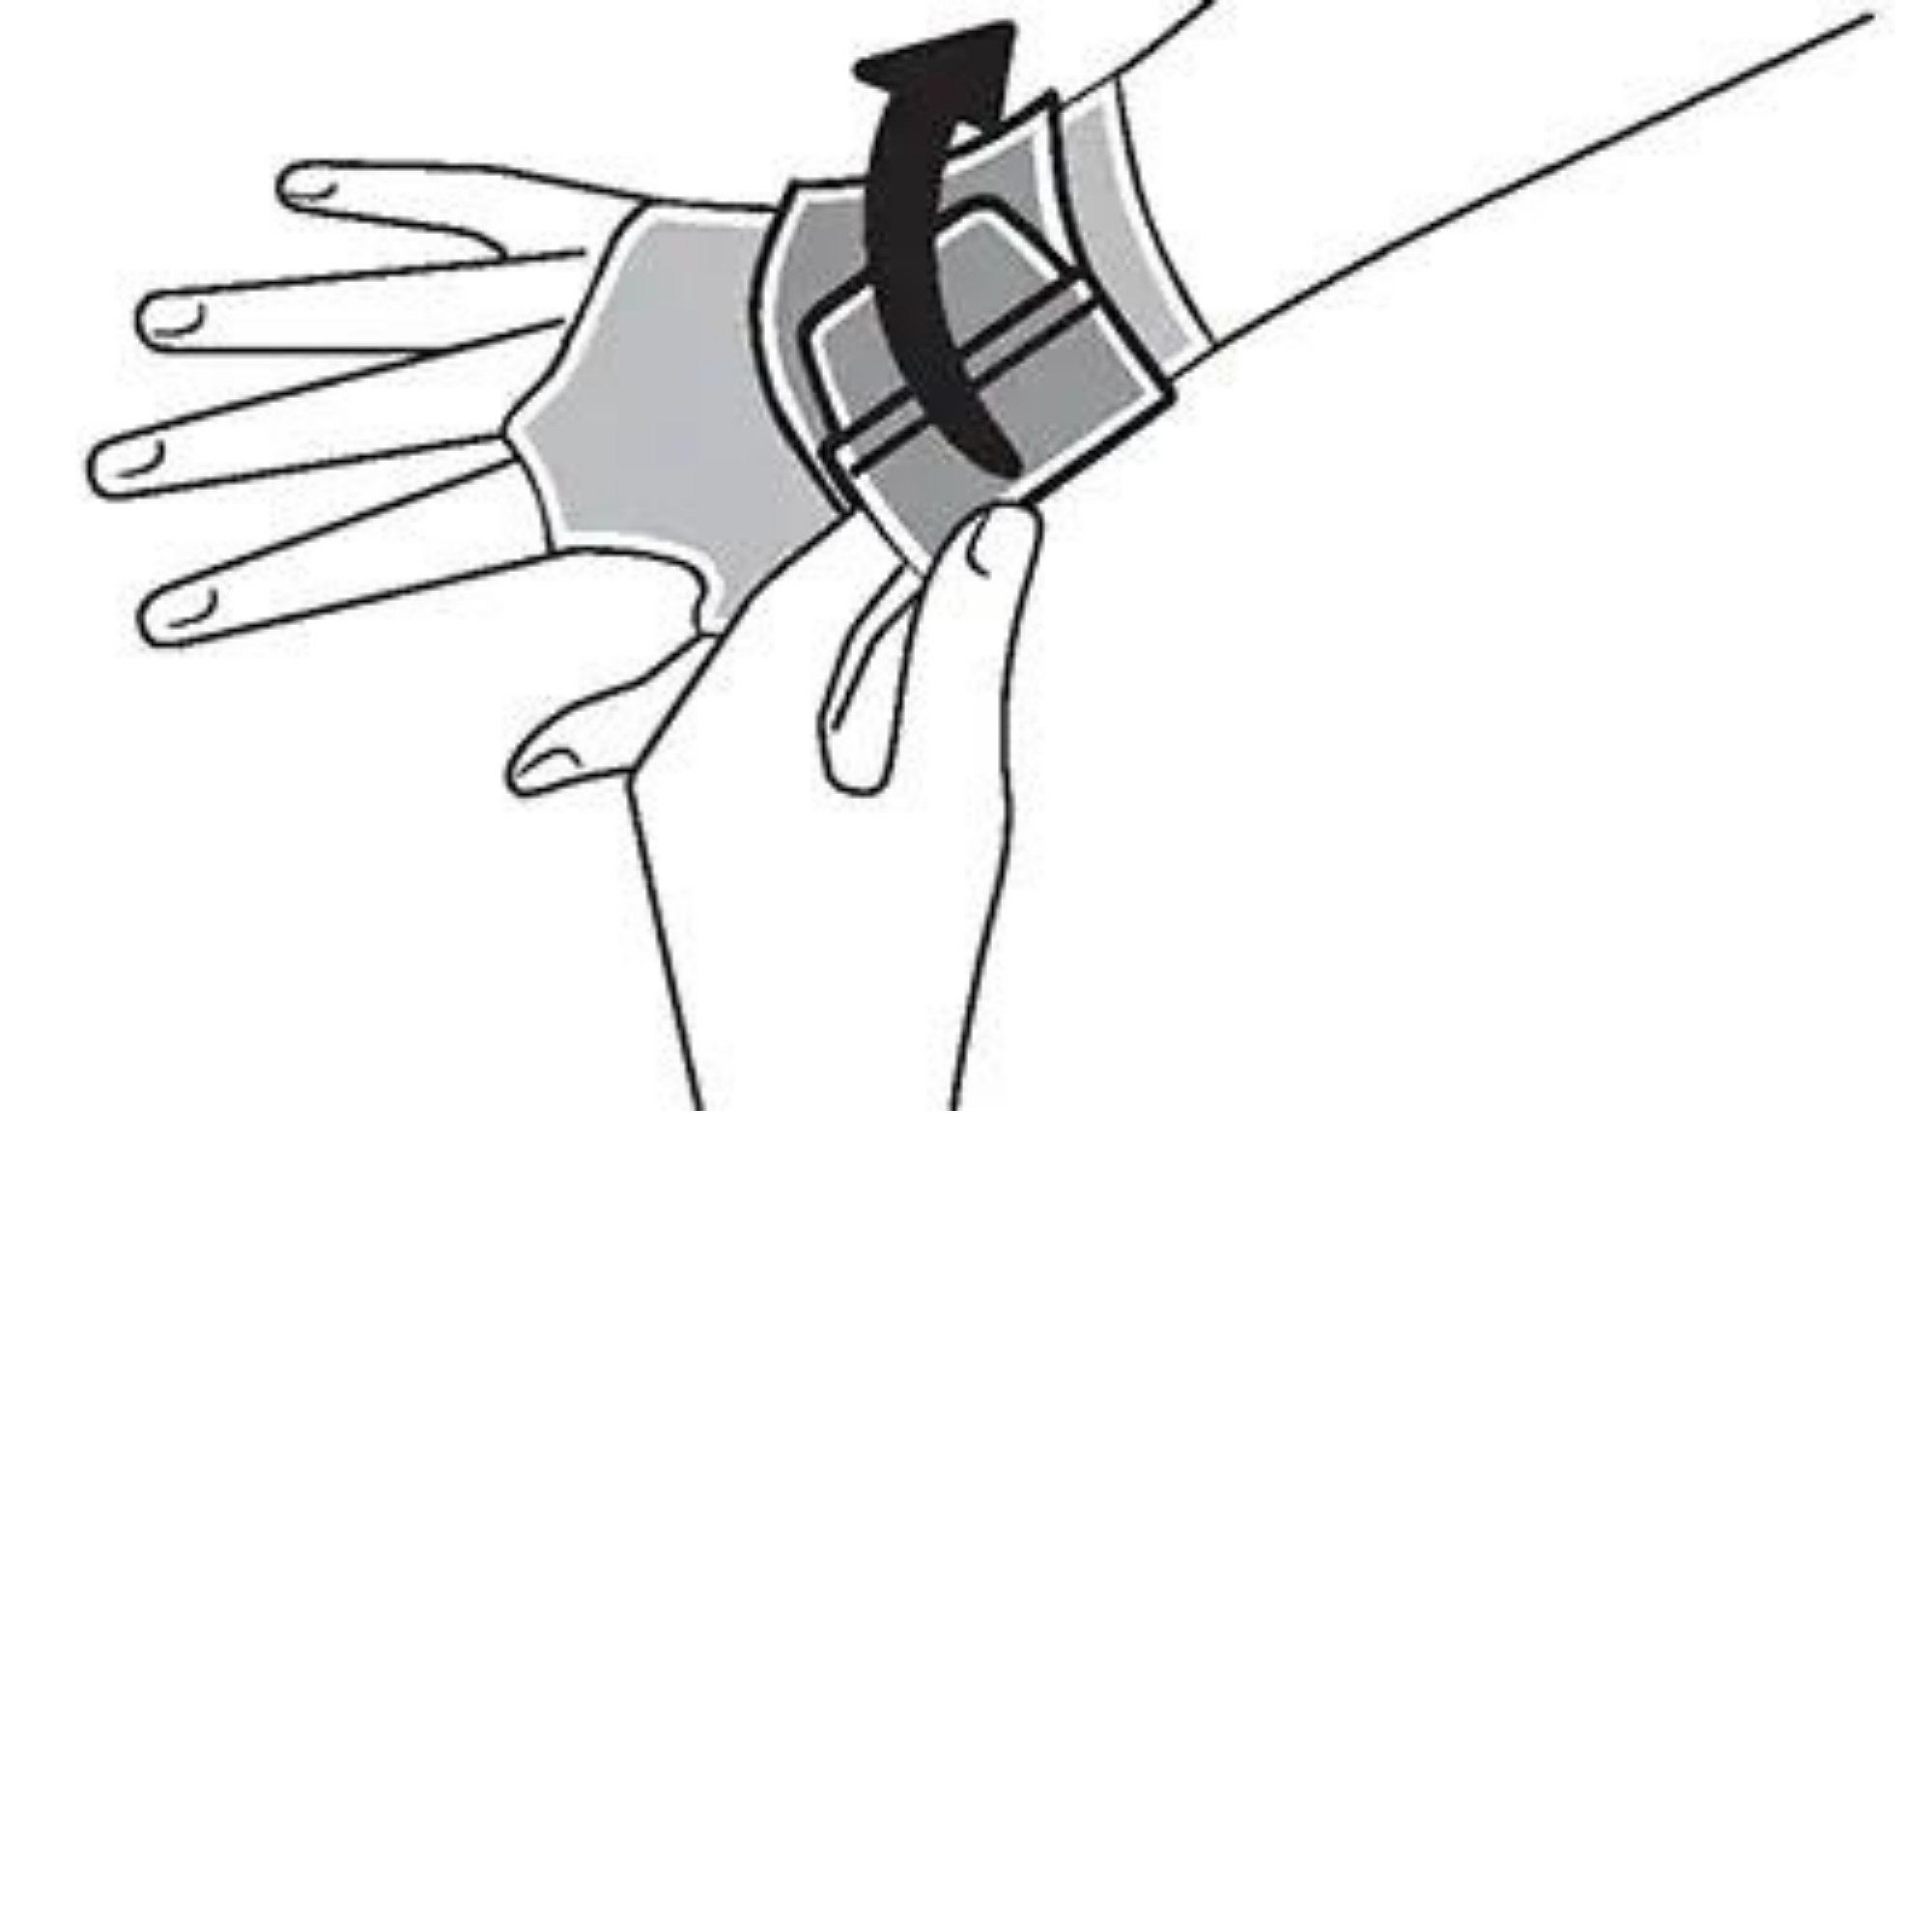 Futuro Compression Glove 09187ENR Large/X-Large